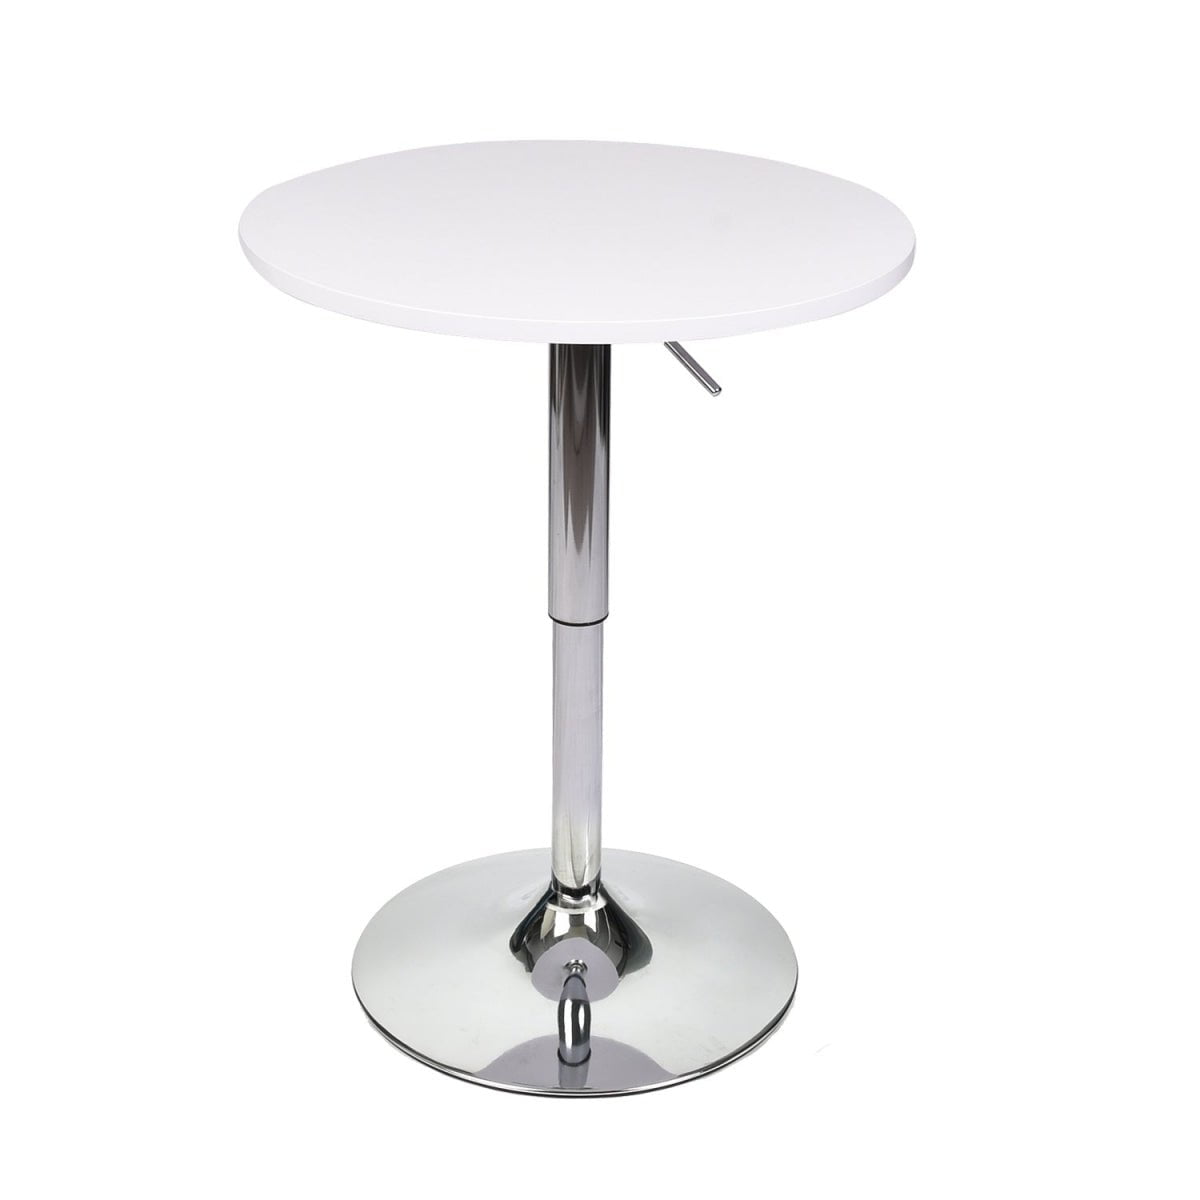 Elecwish white bar table